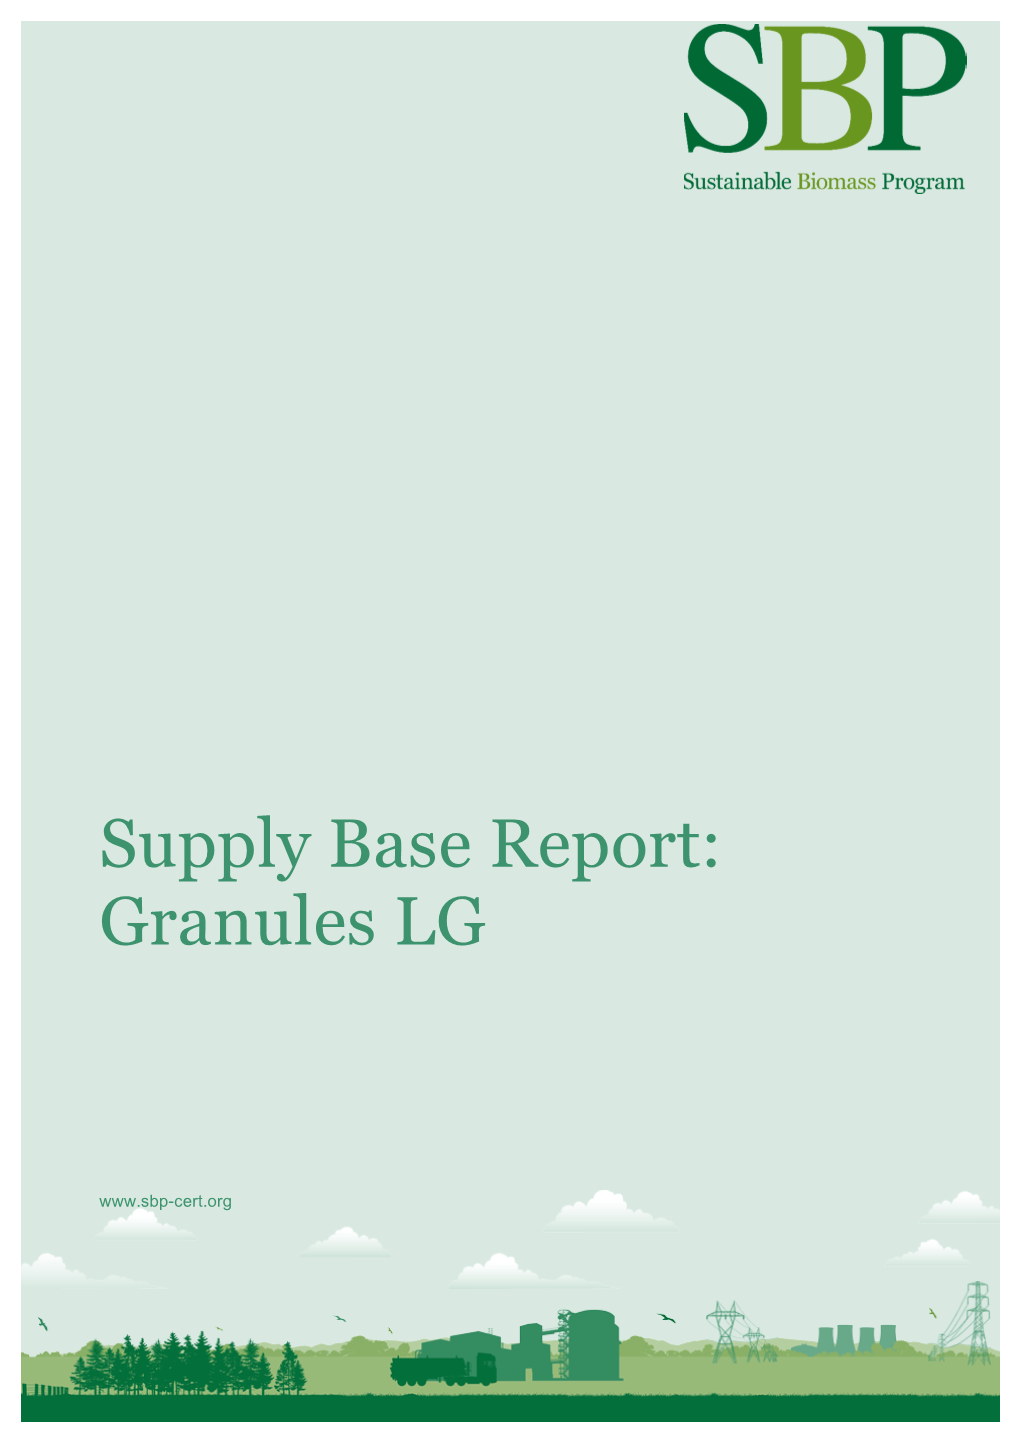 Supply Base Report V1.2 Granules LG FINAL